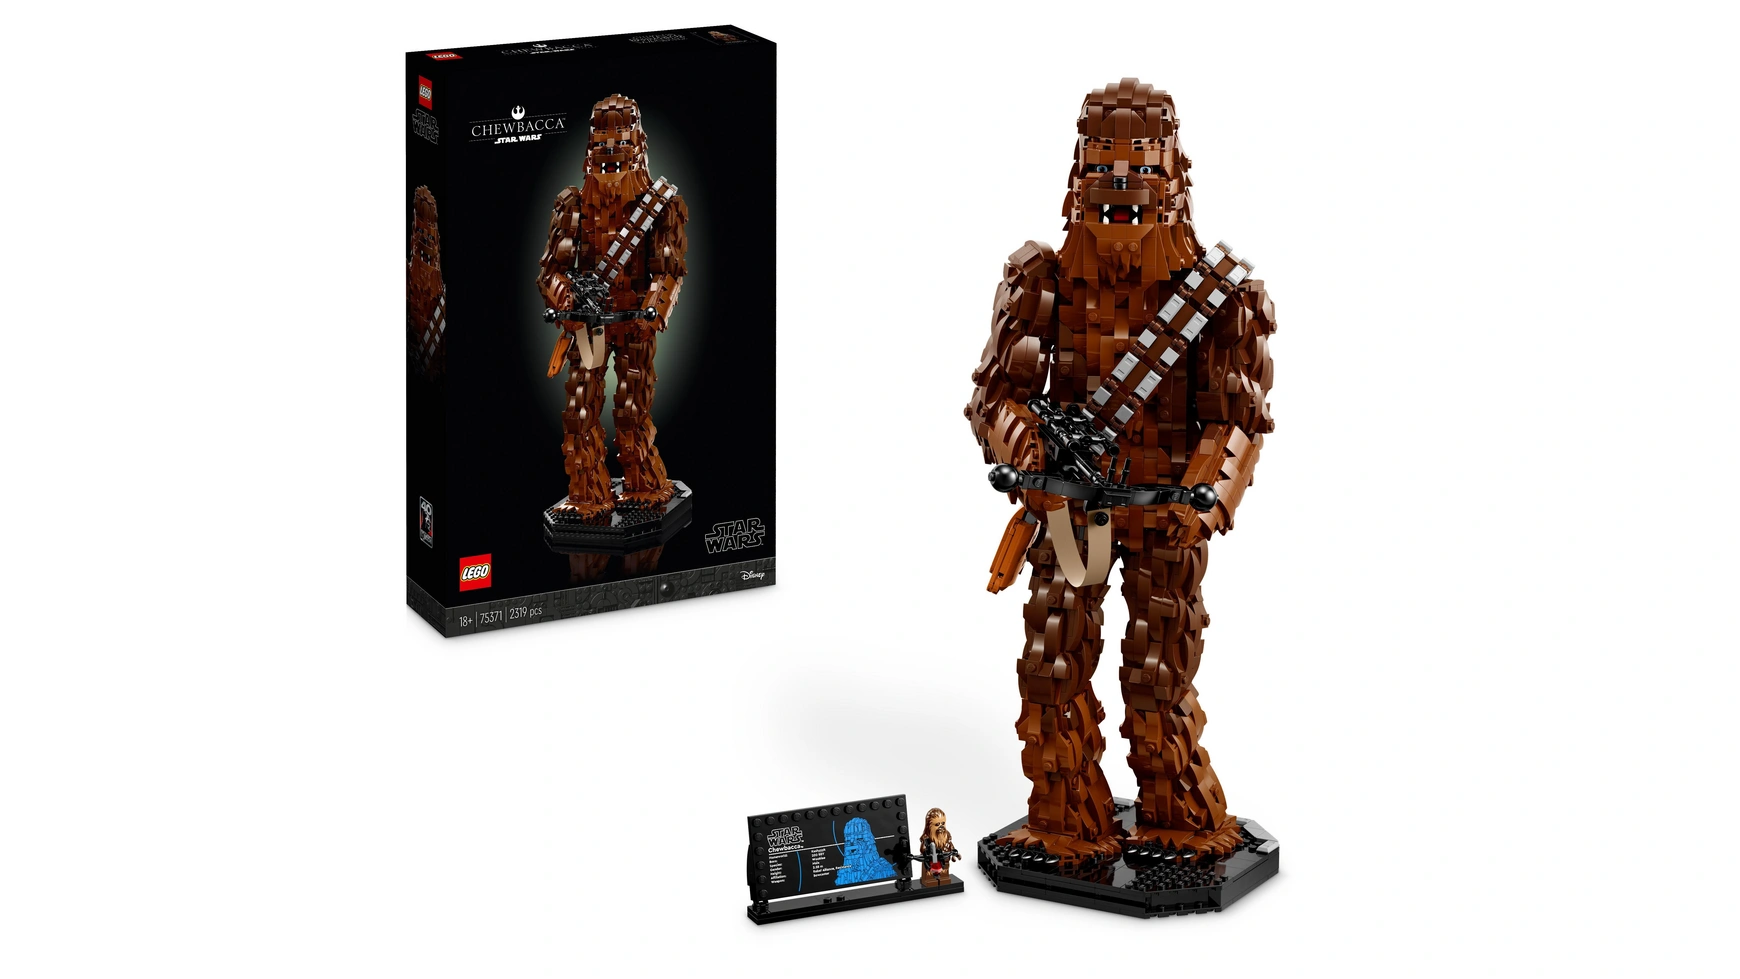 Lego Star Wars Фигурка Чубакки, модель здания вуки для взрослых держатель для геймпада exquisite gaming cable guy star wars chewbacca